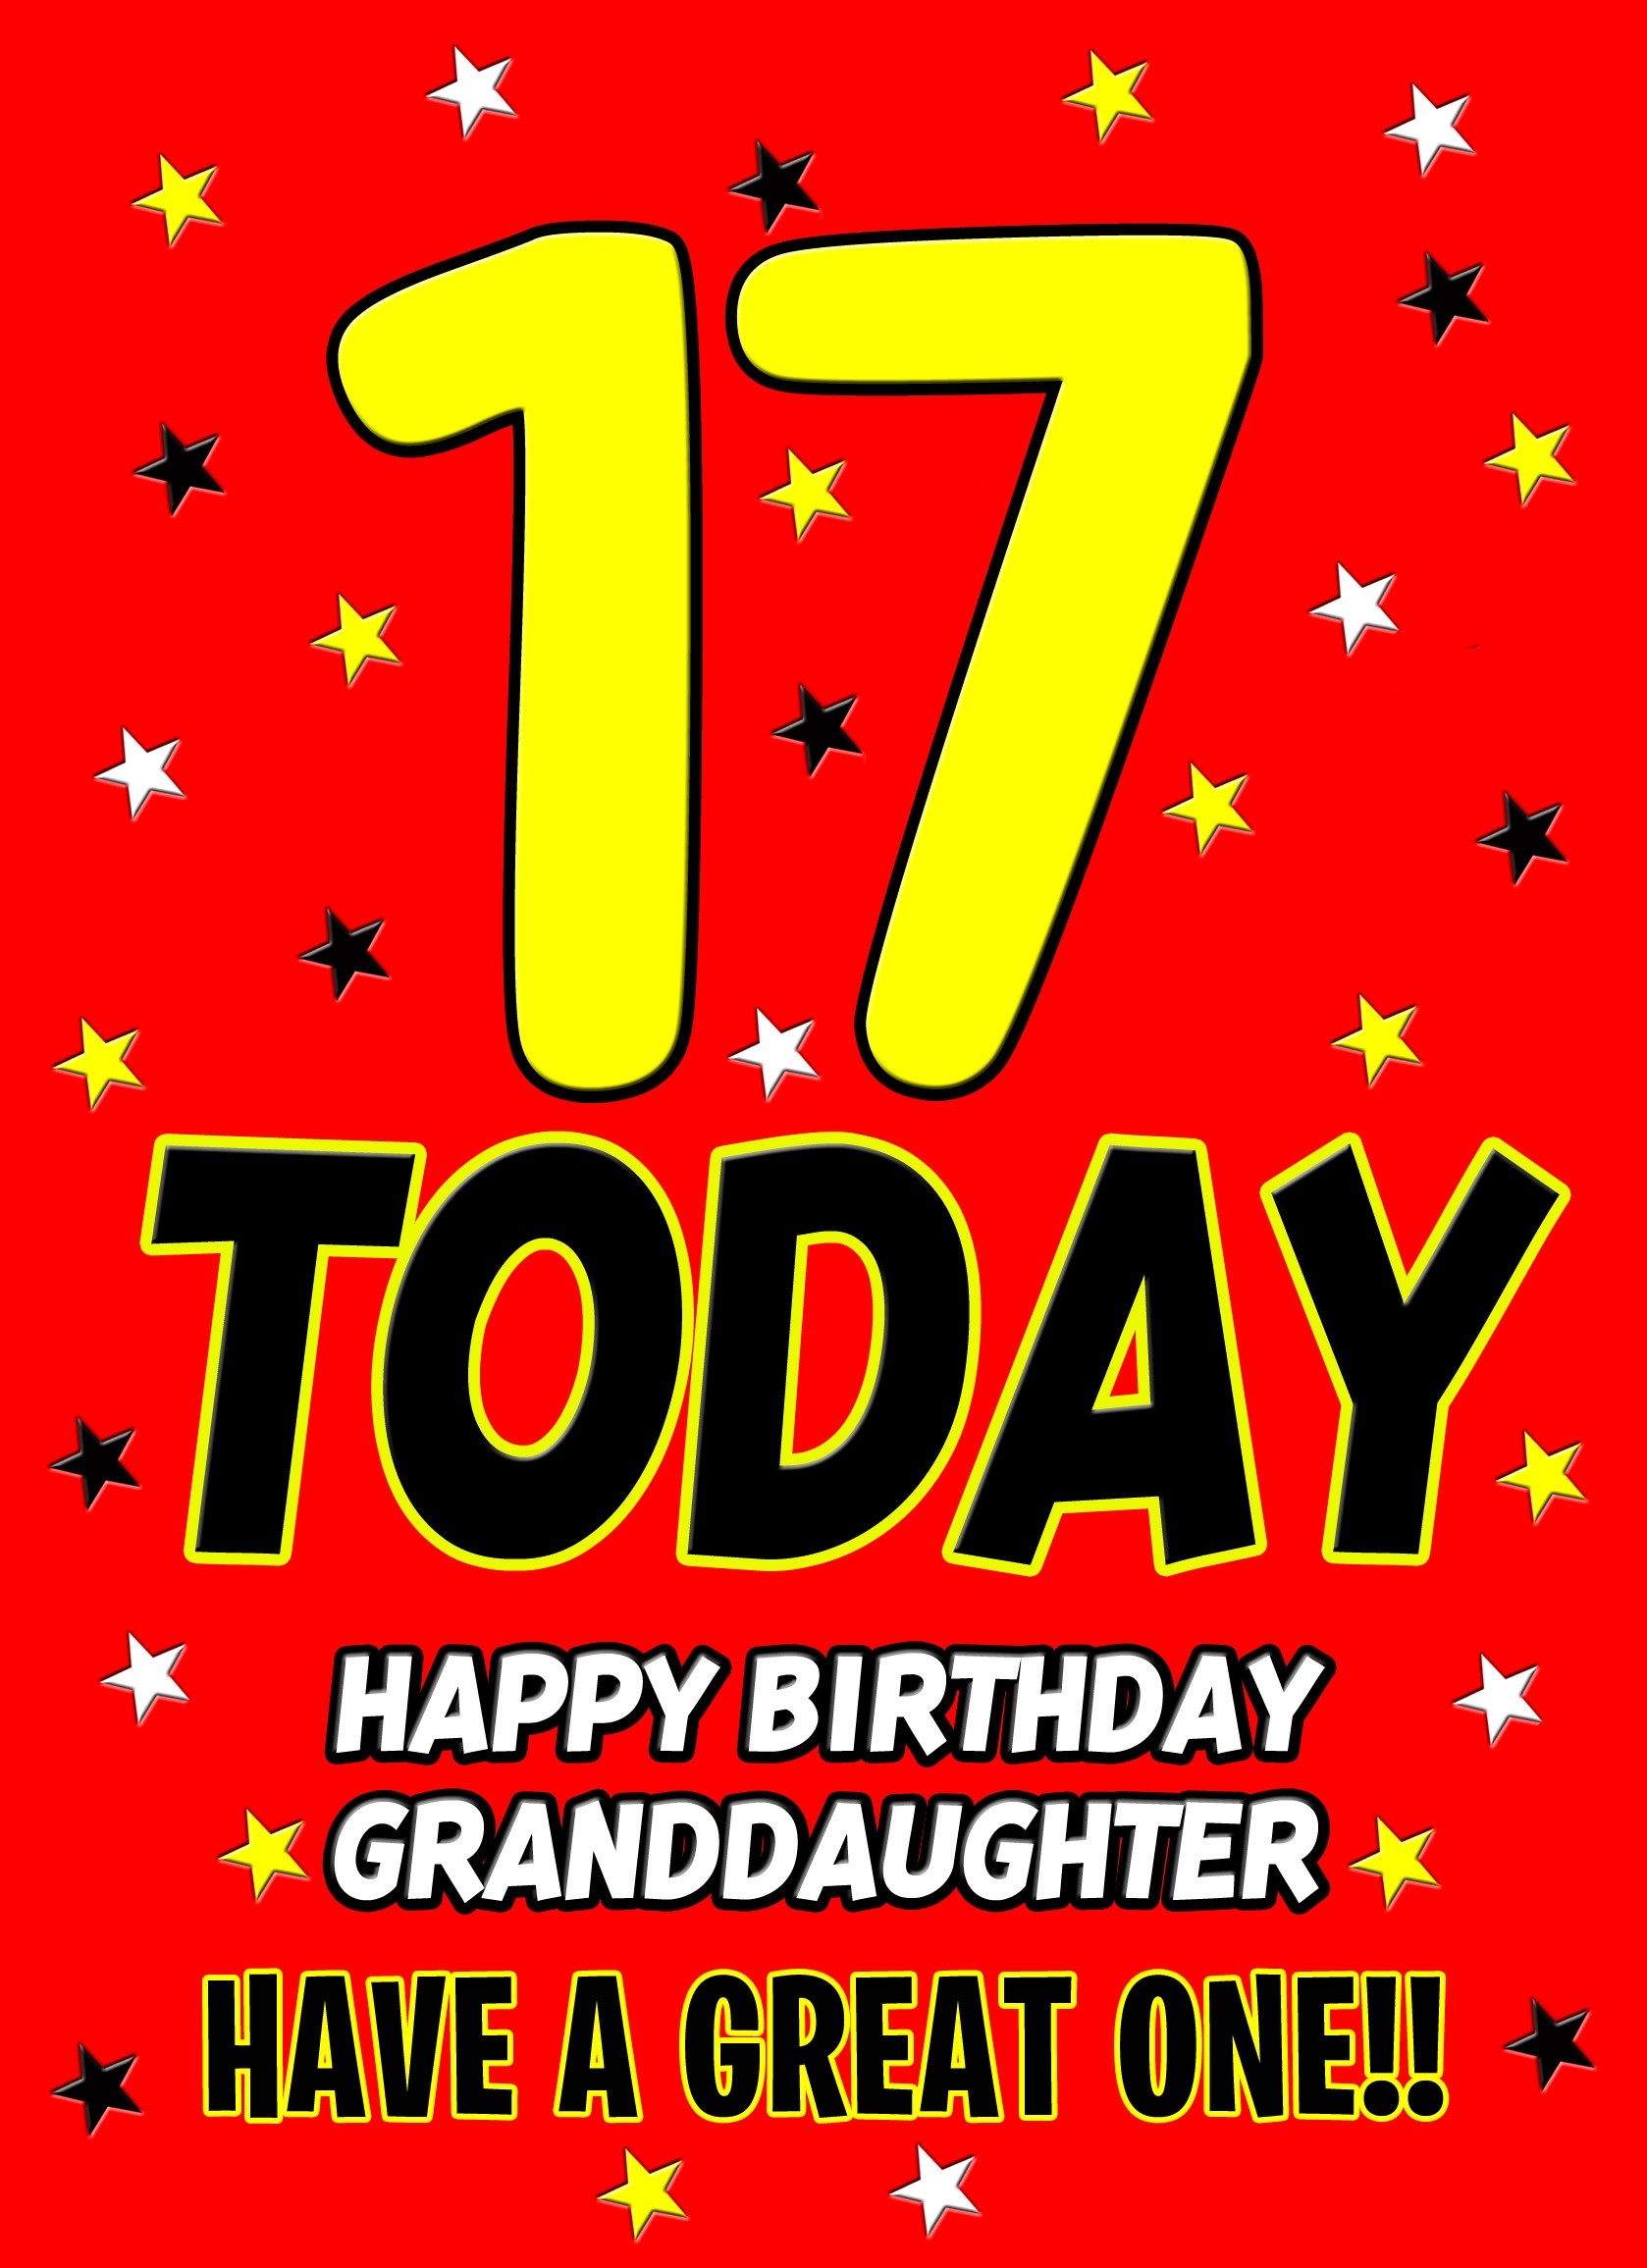 17 Today Birthday Card (Granddaughter)